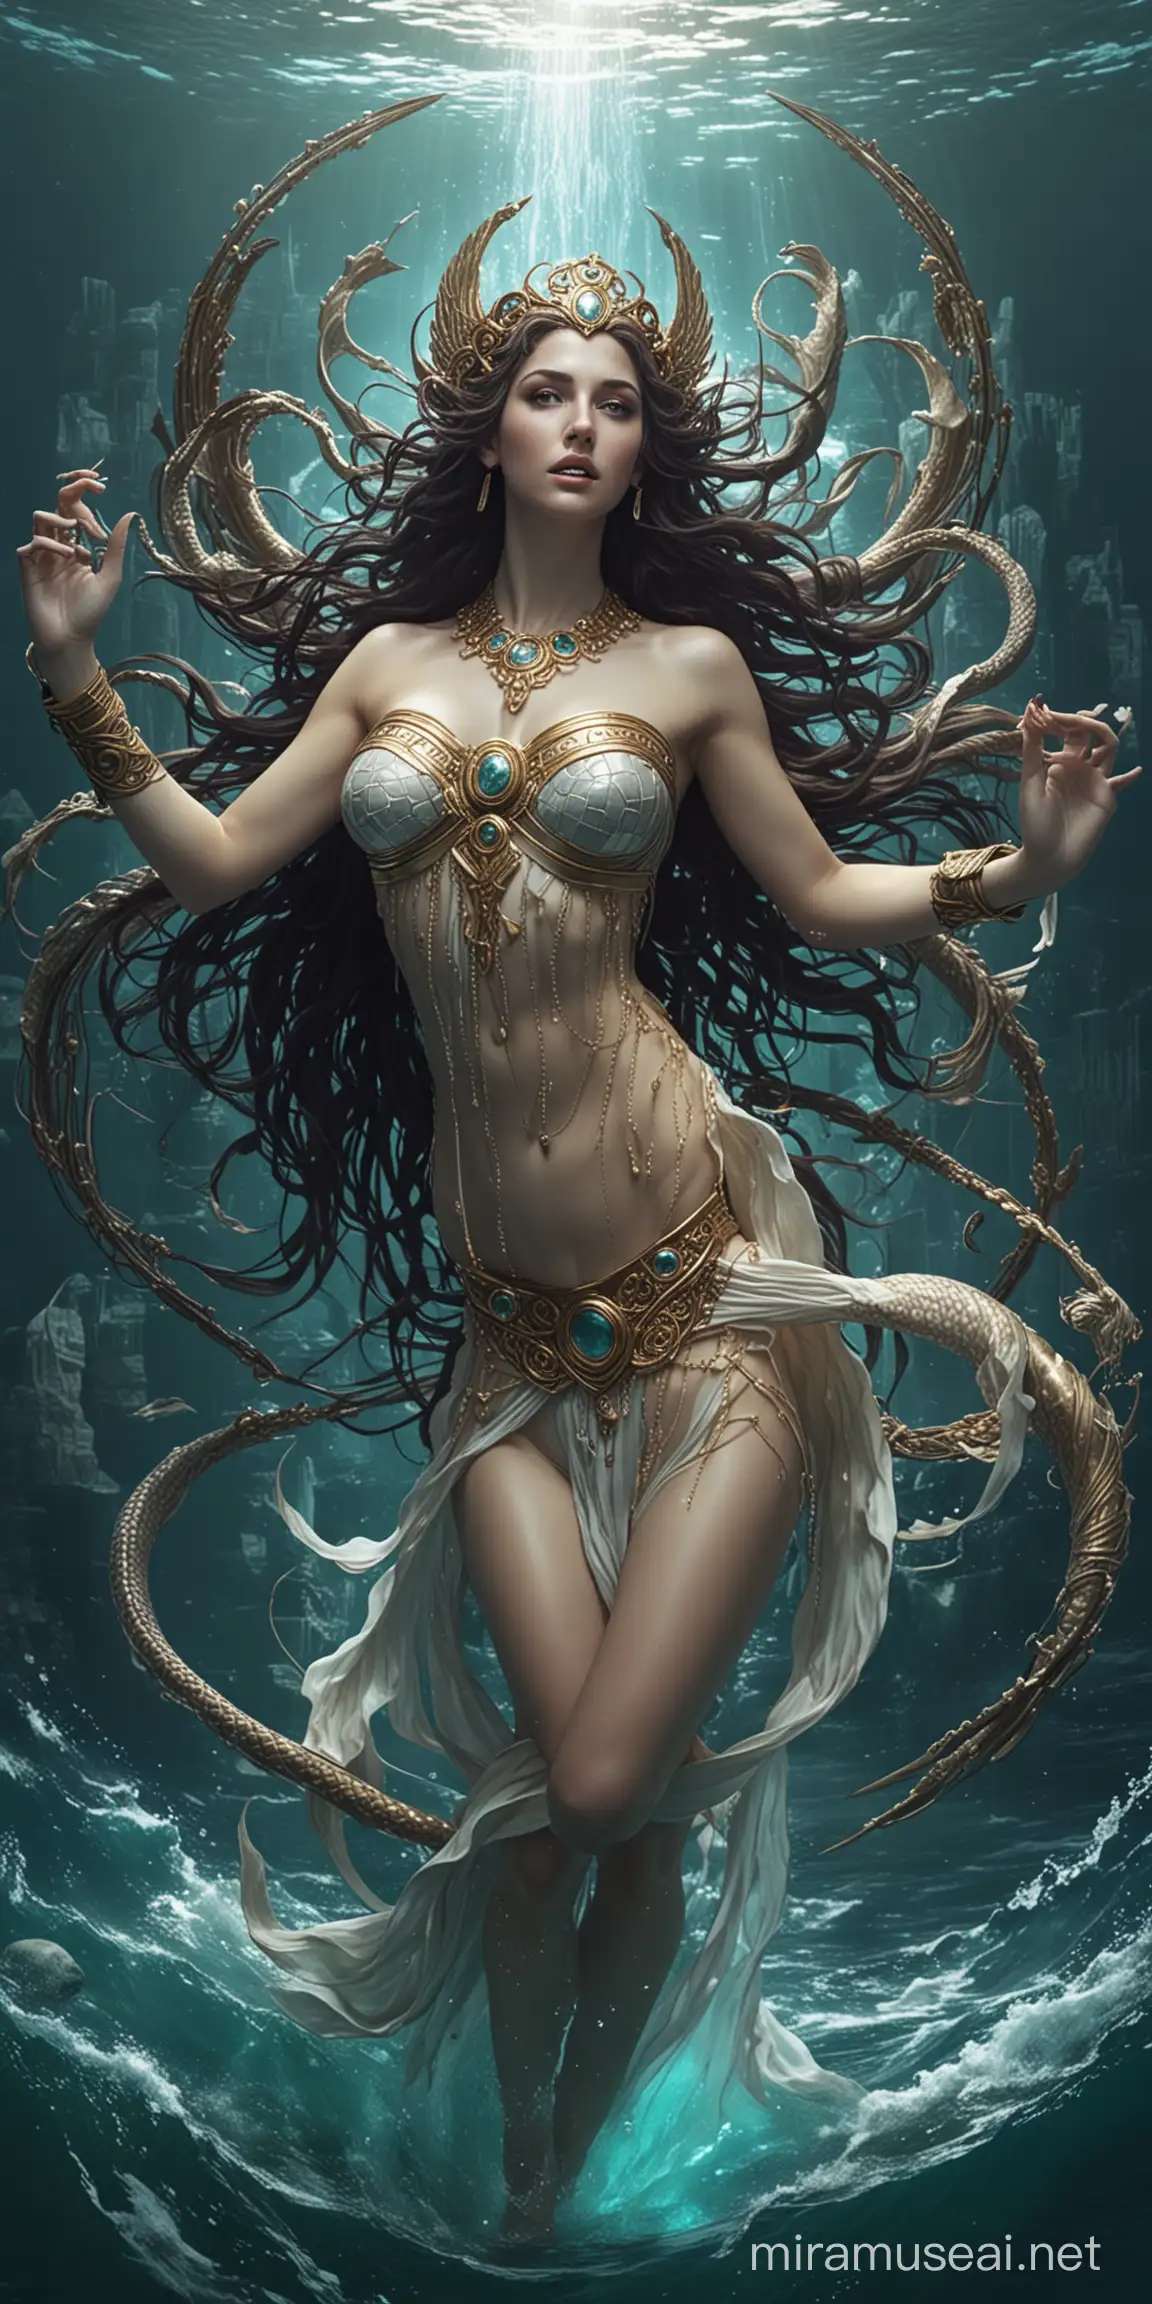 Cyber Siren Enchanting Goddess of Greek Mythology in a Futuristic Realm